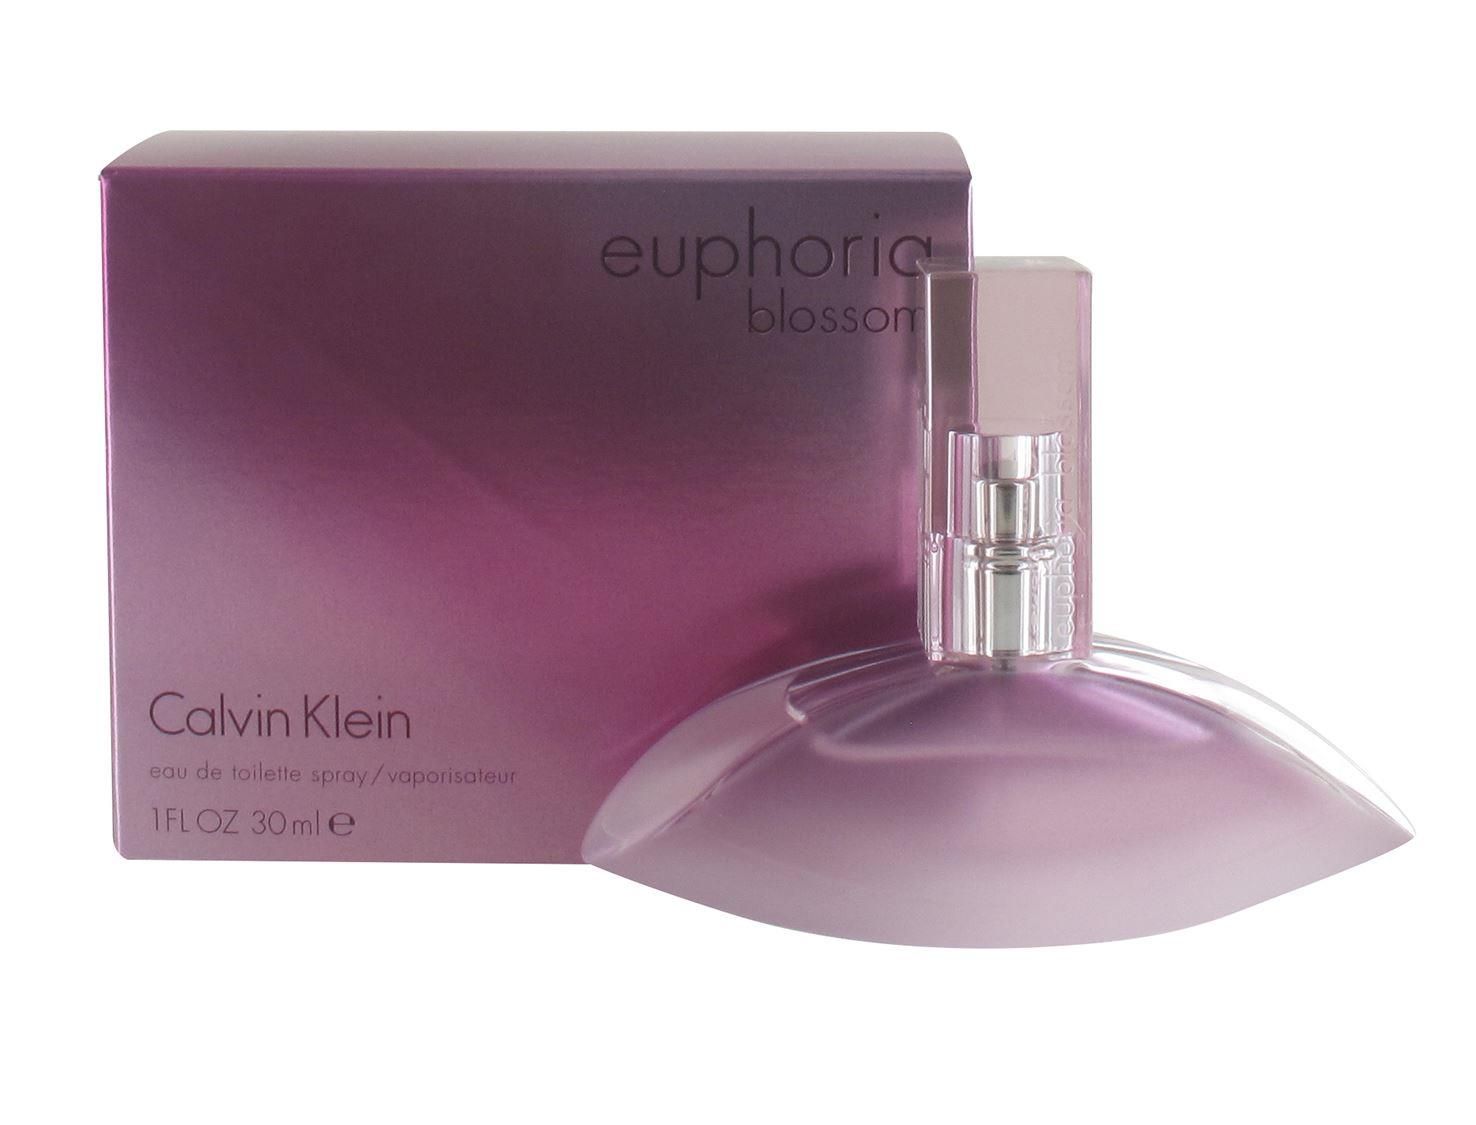 Calvin Klein Euphoria Blossom Eau de Toilette Spray 30ml for Her